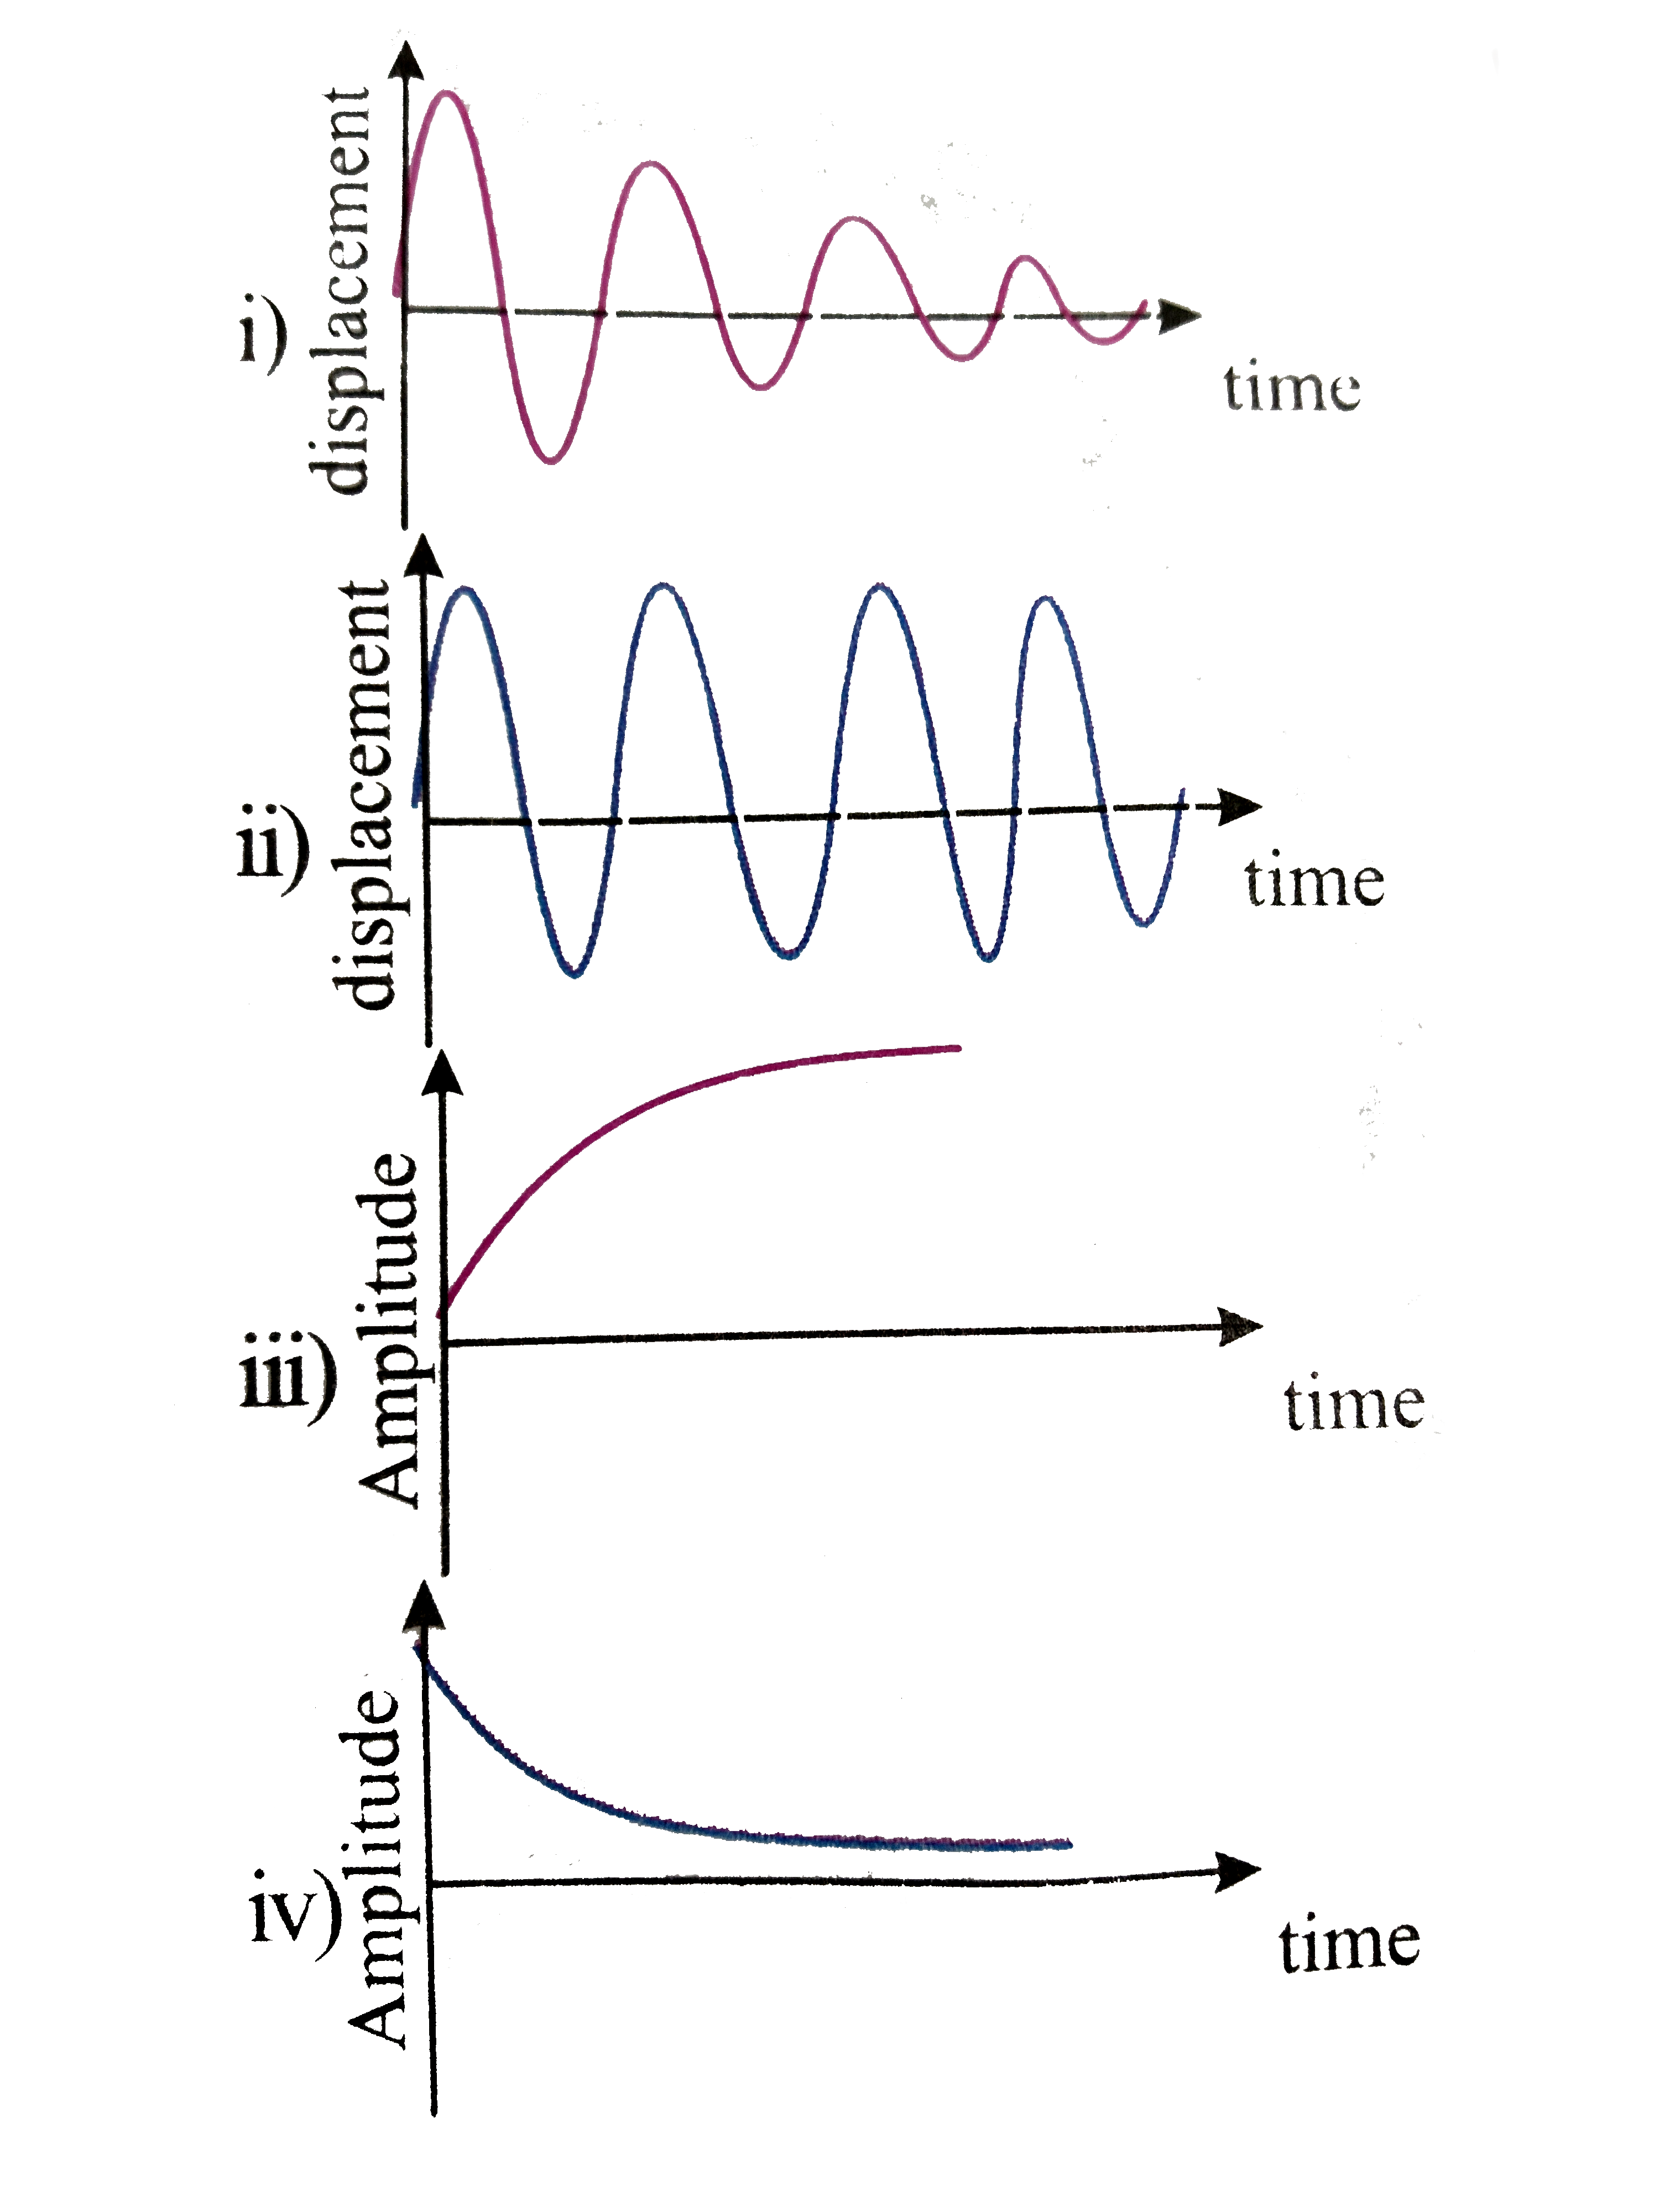 damped harmonic oscillator examples